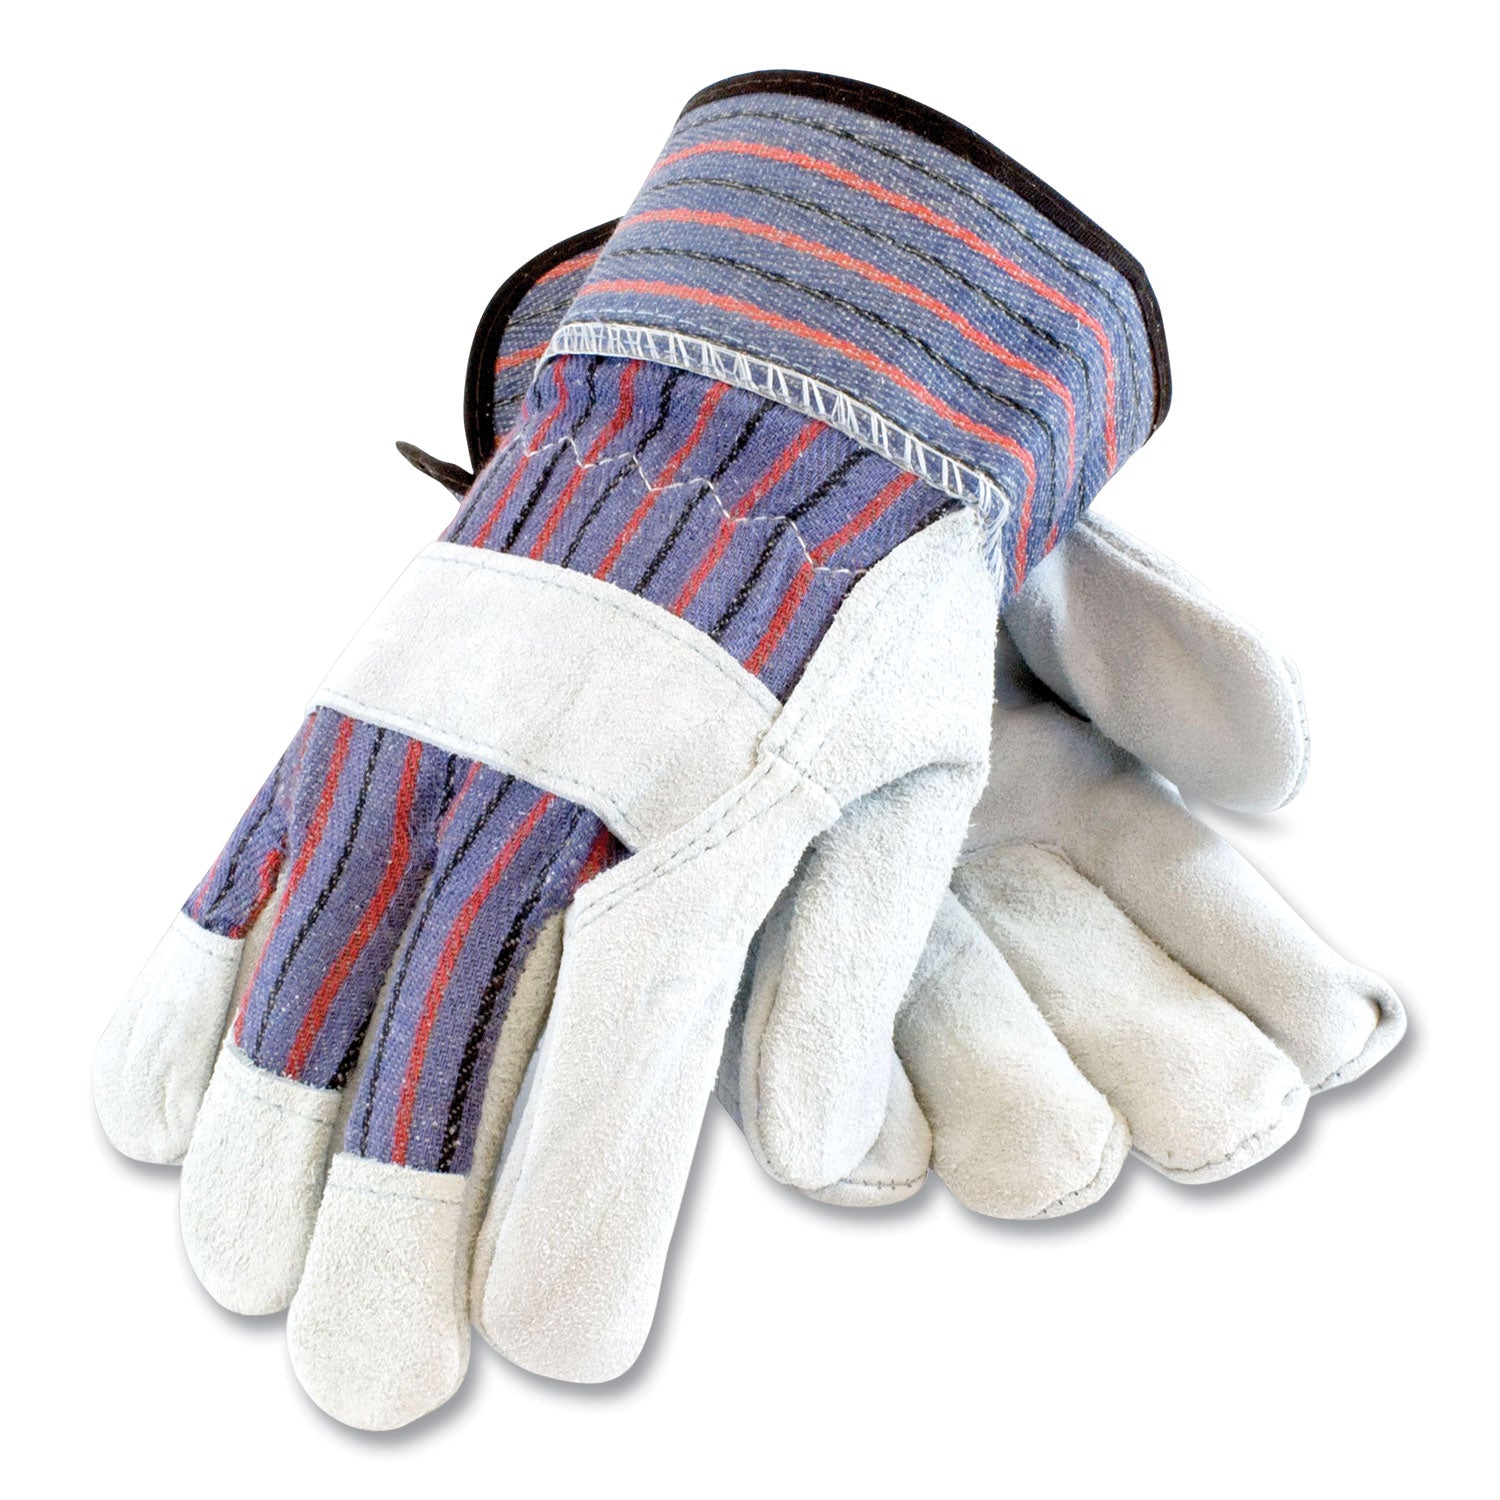 shoulder-split-cowhide-leather-palm-gloves-b-c-grade-medium-blue-gray-12-pairs_pid847532m - 1